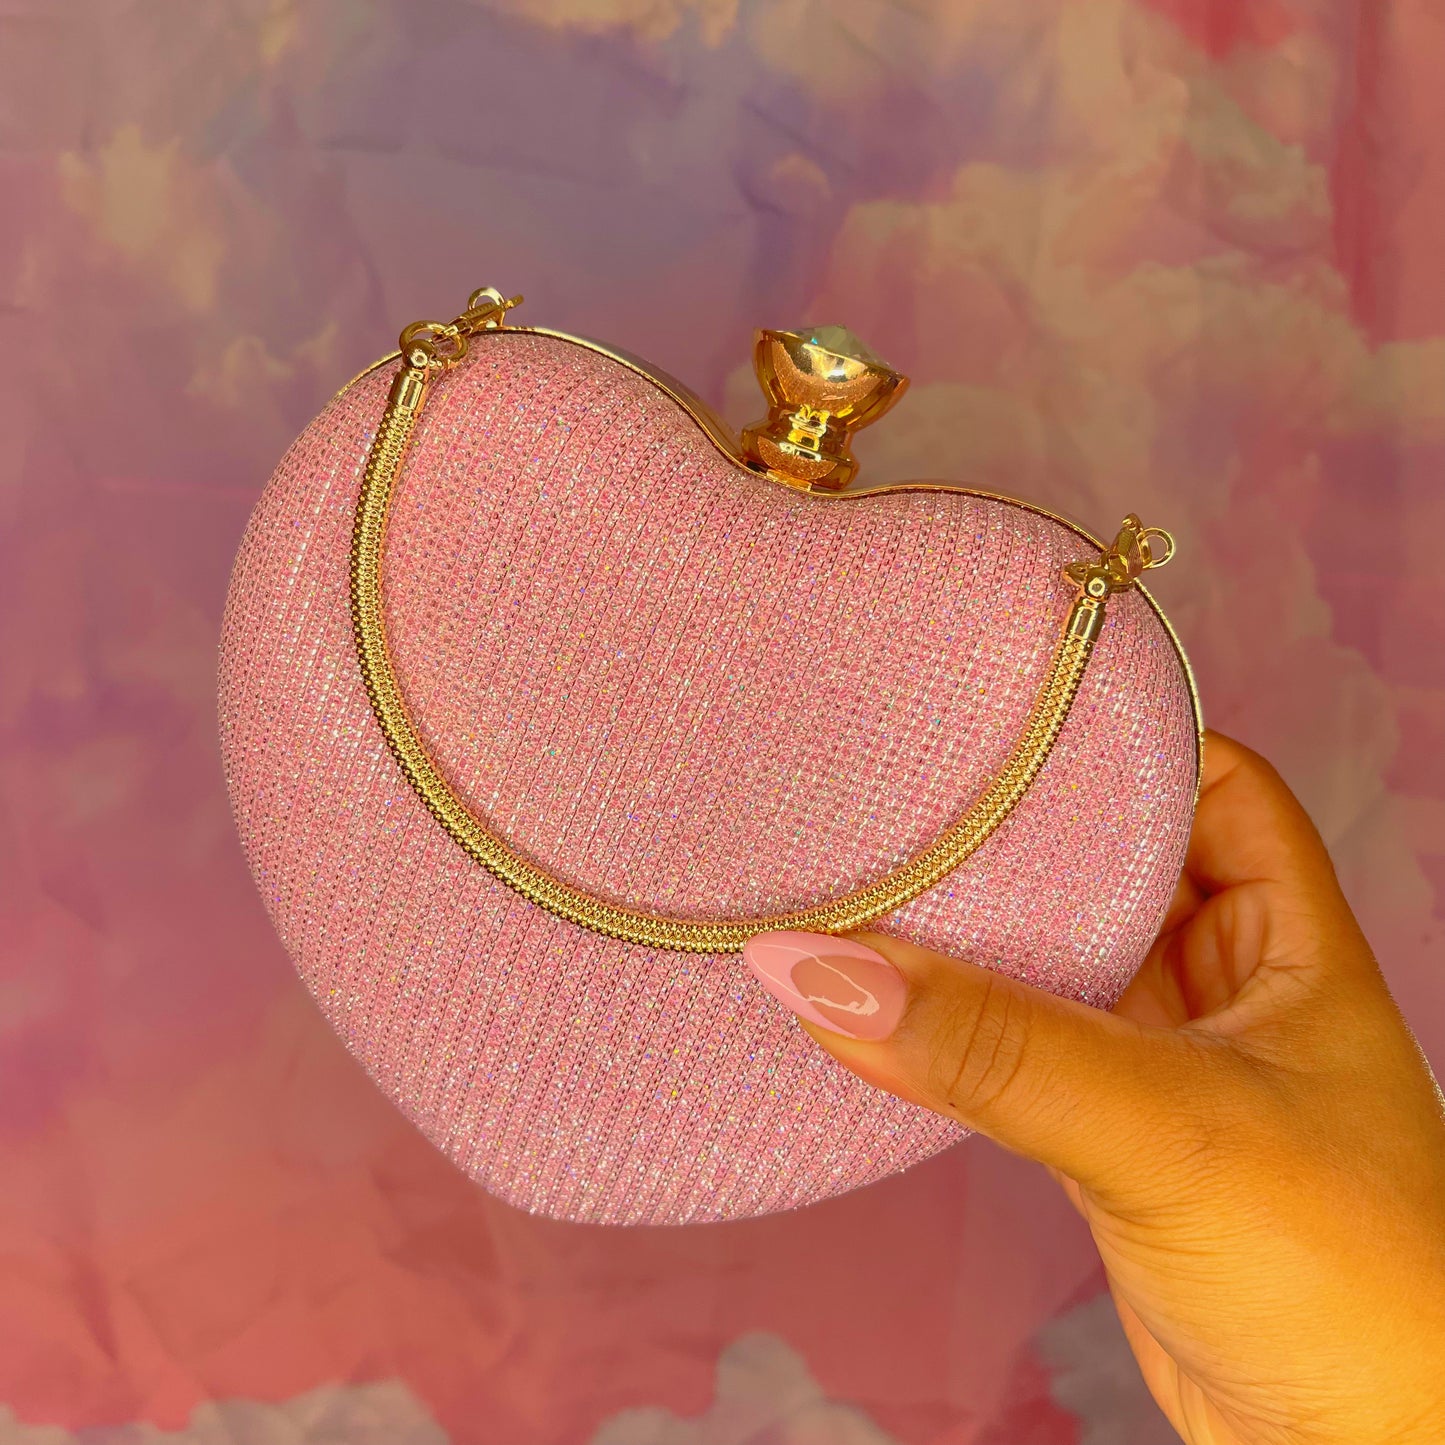 Gorgeous Heart Clutch Bag